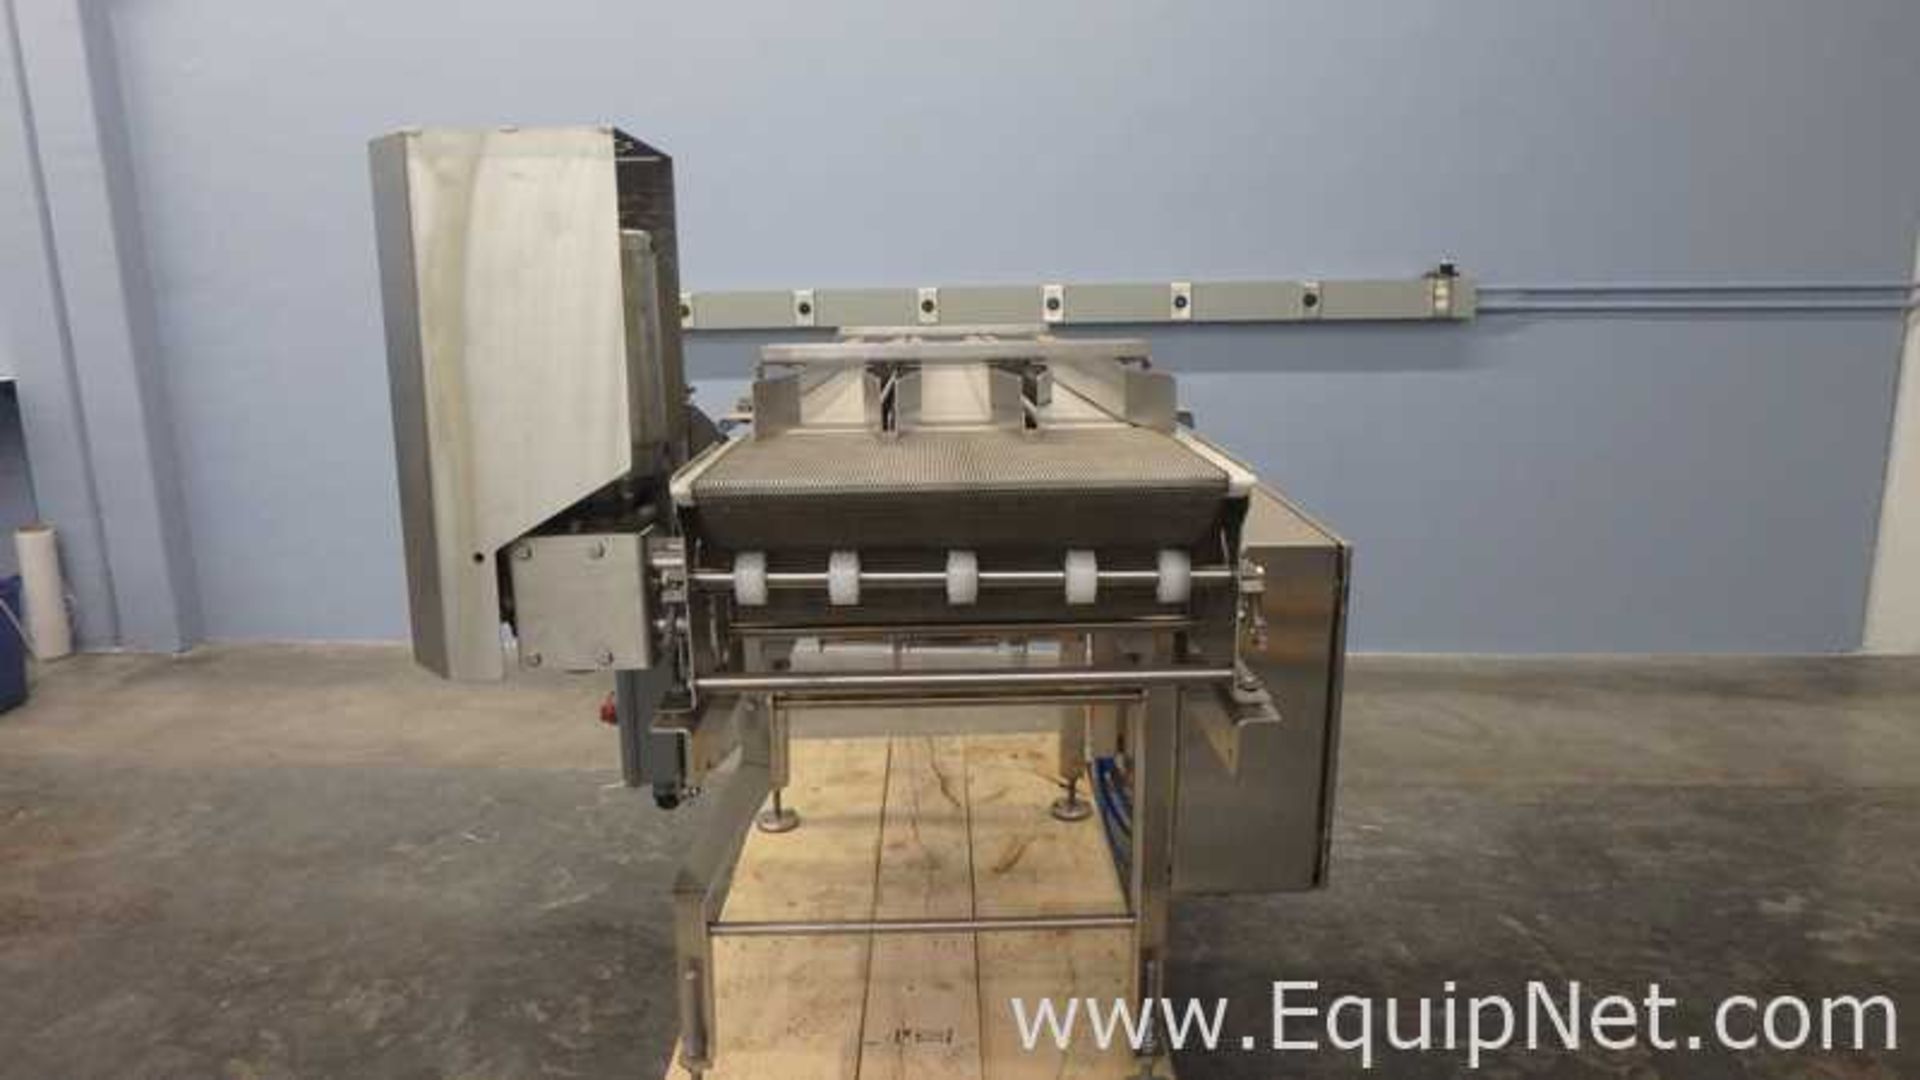 KleenLine Engineered Stainless Steel Conveyor Designed for Full Washdown - Image 15 of 30